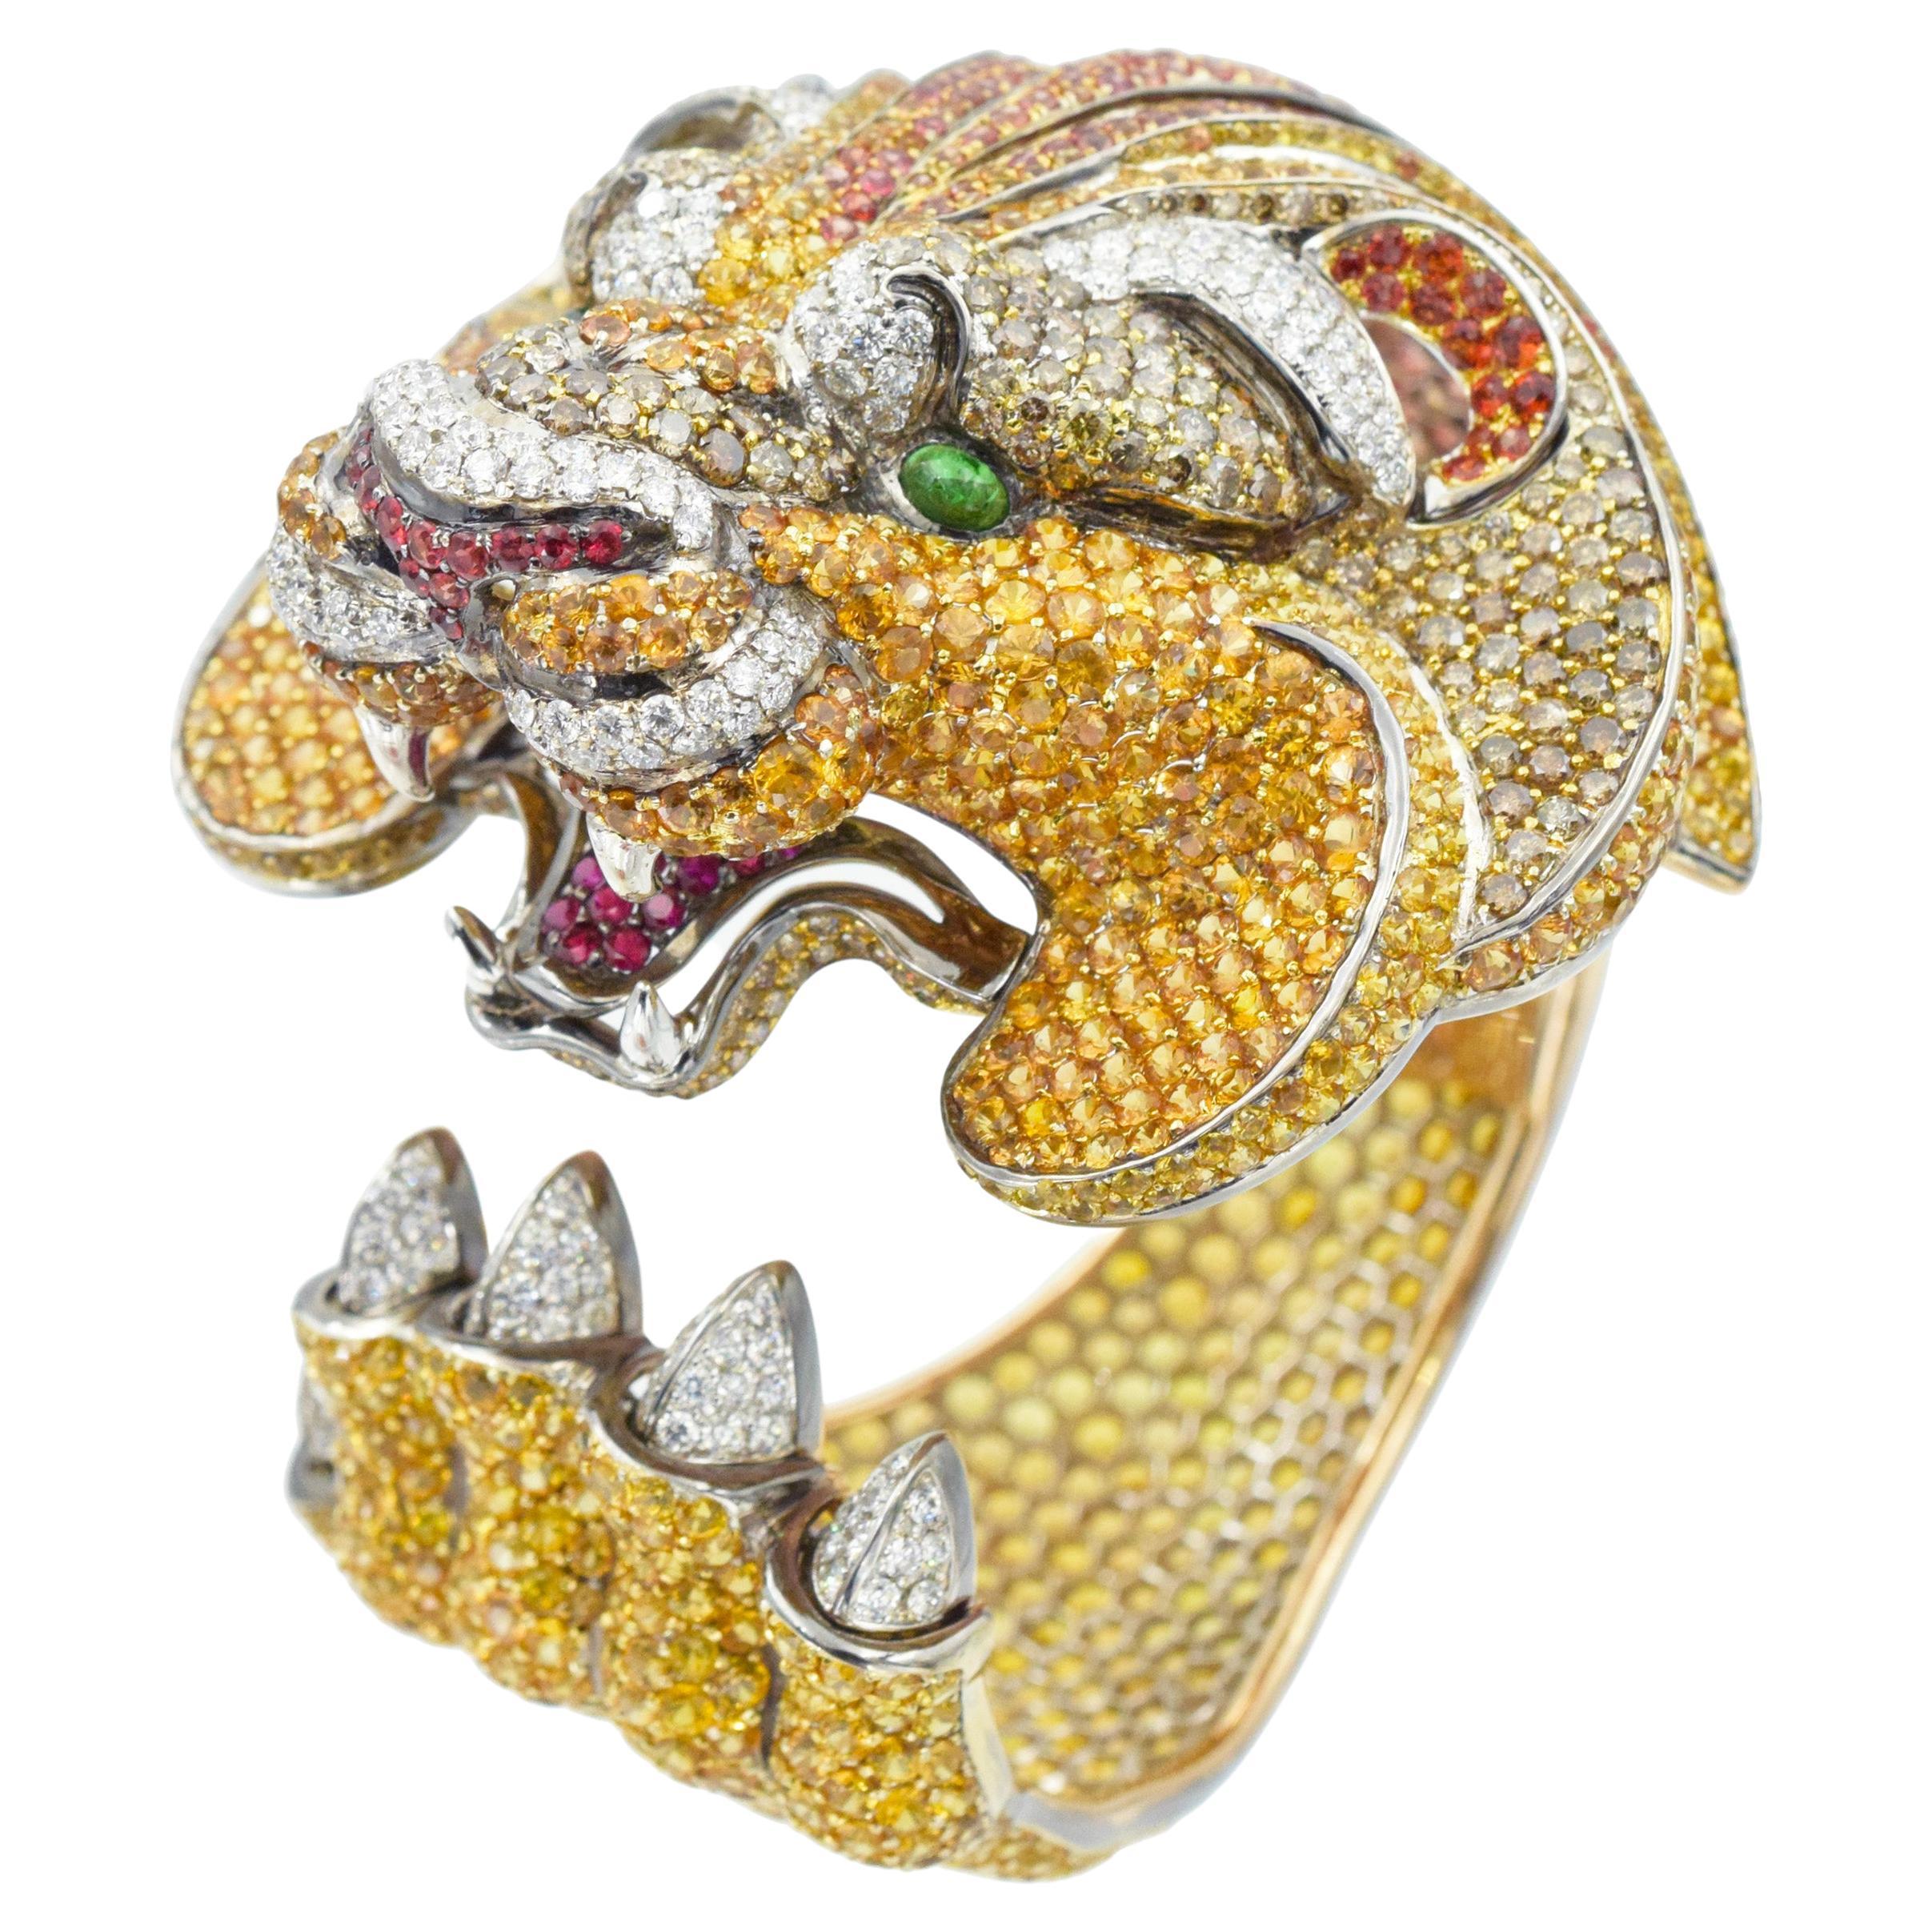 De Grisogono Diamond and Gemstone Lion Cuff Bracelet